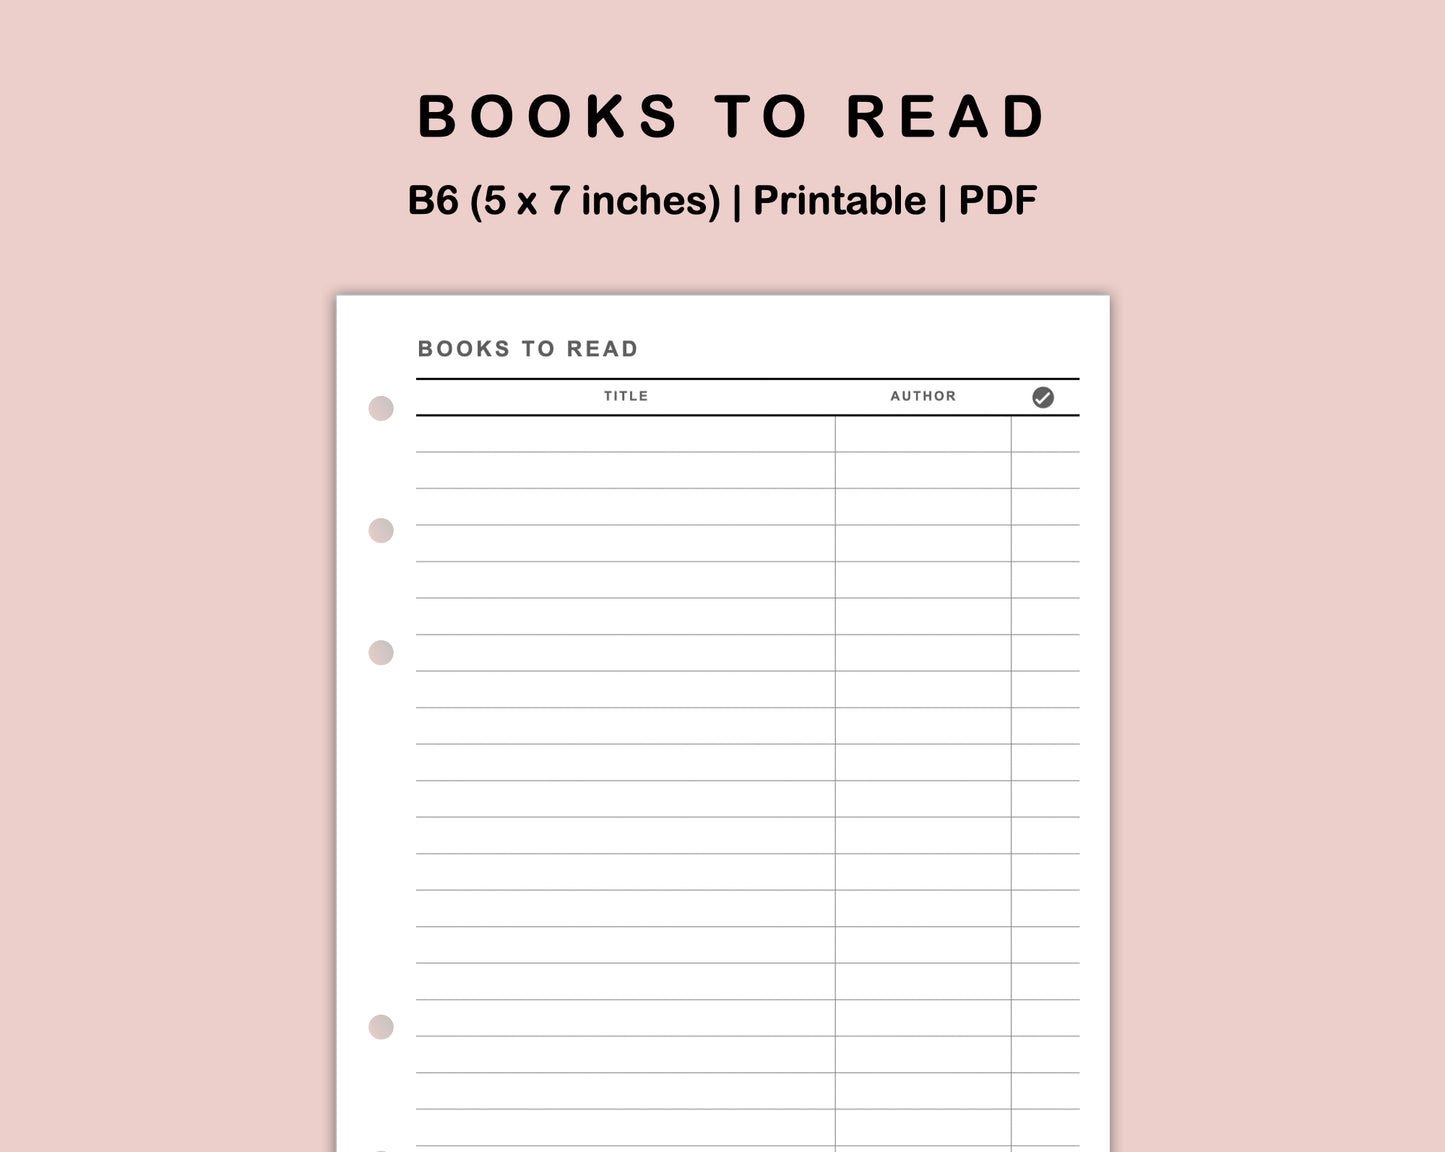 B6 Inserts - Books to read